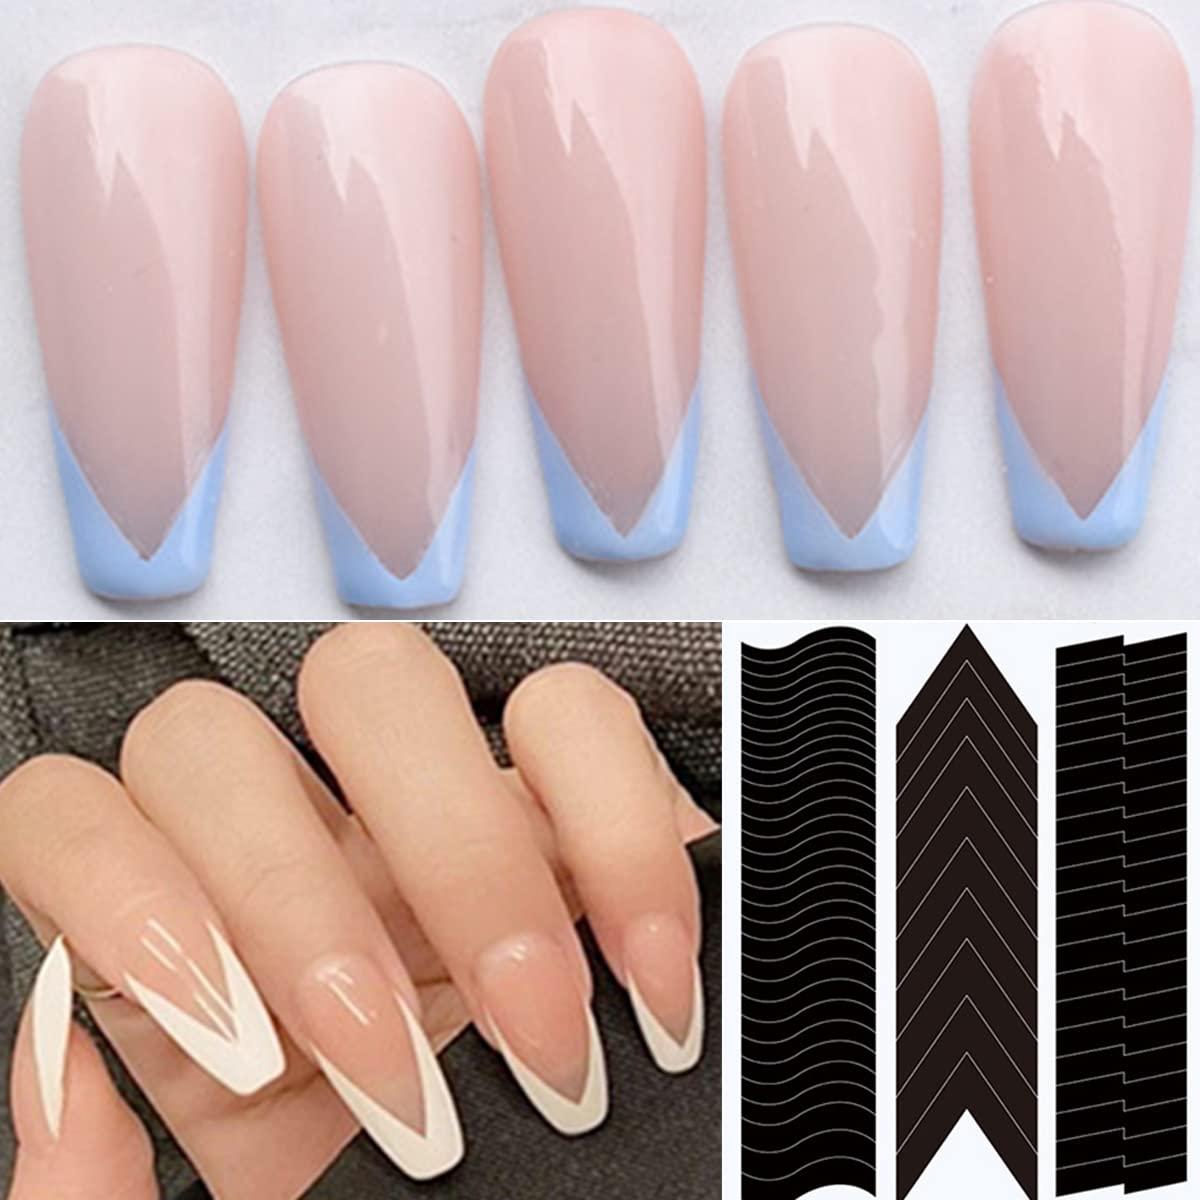 What's your shape? | Acrylic nail shapes, Nails, Nail shapes